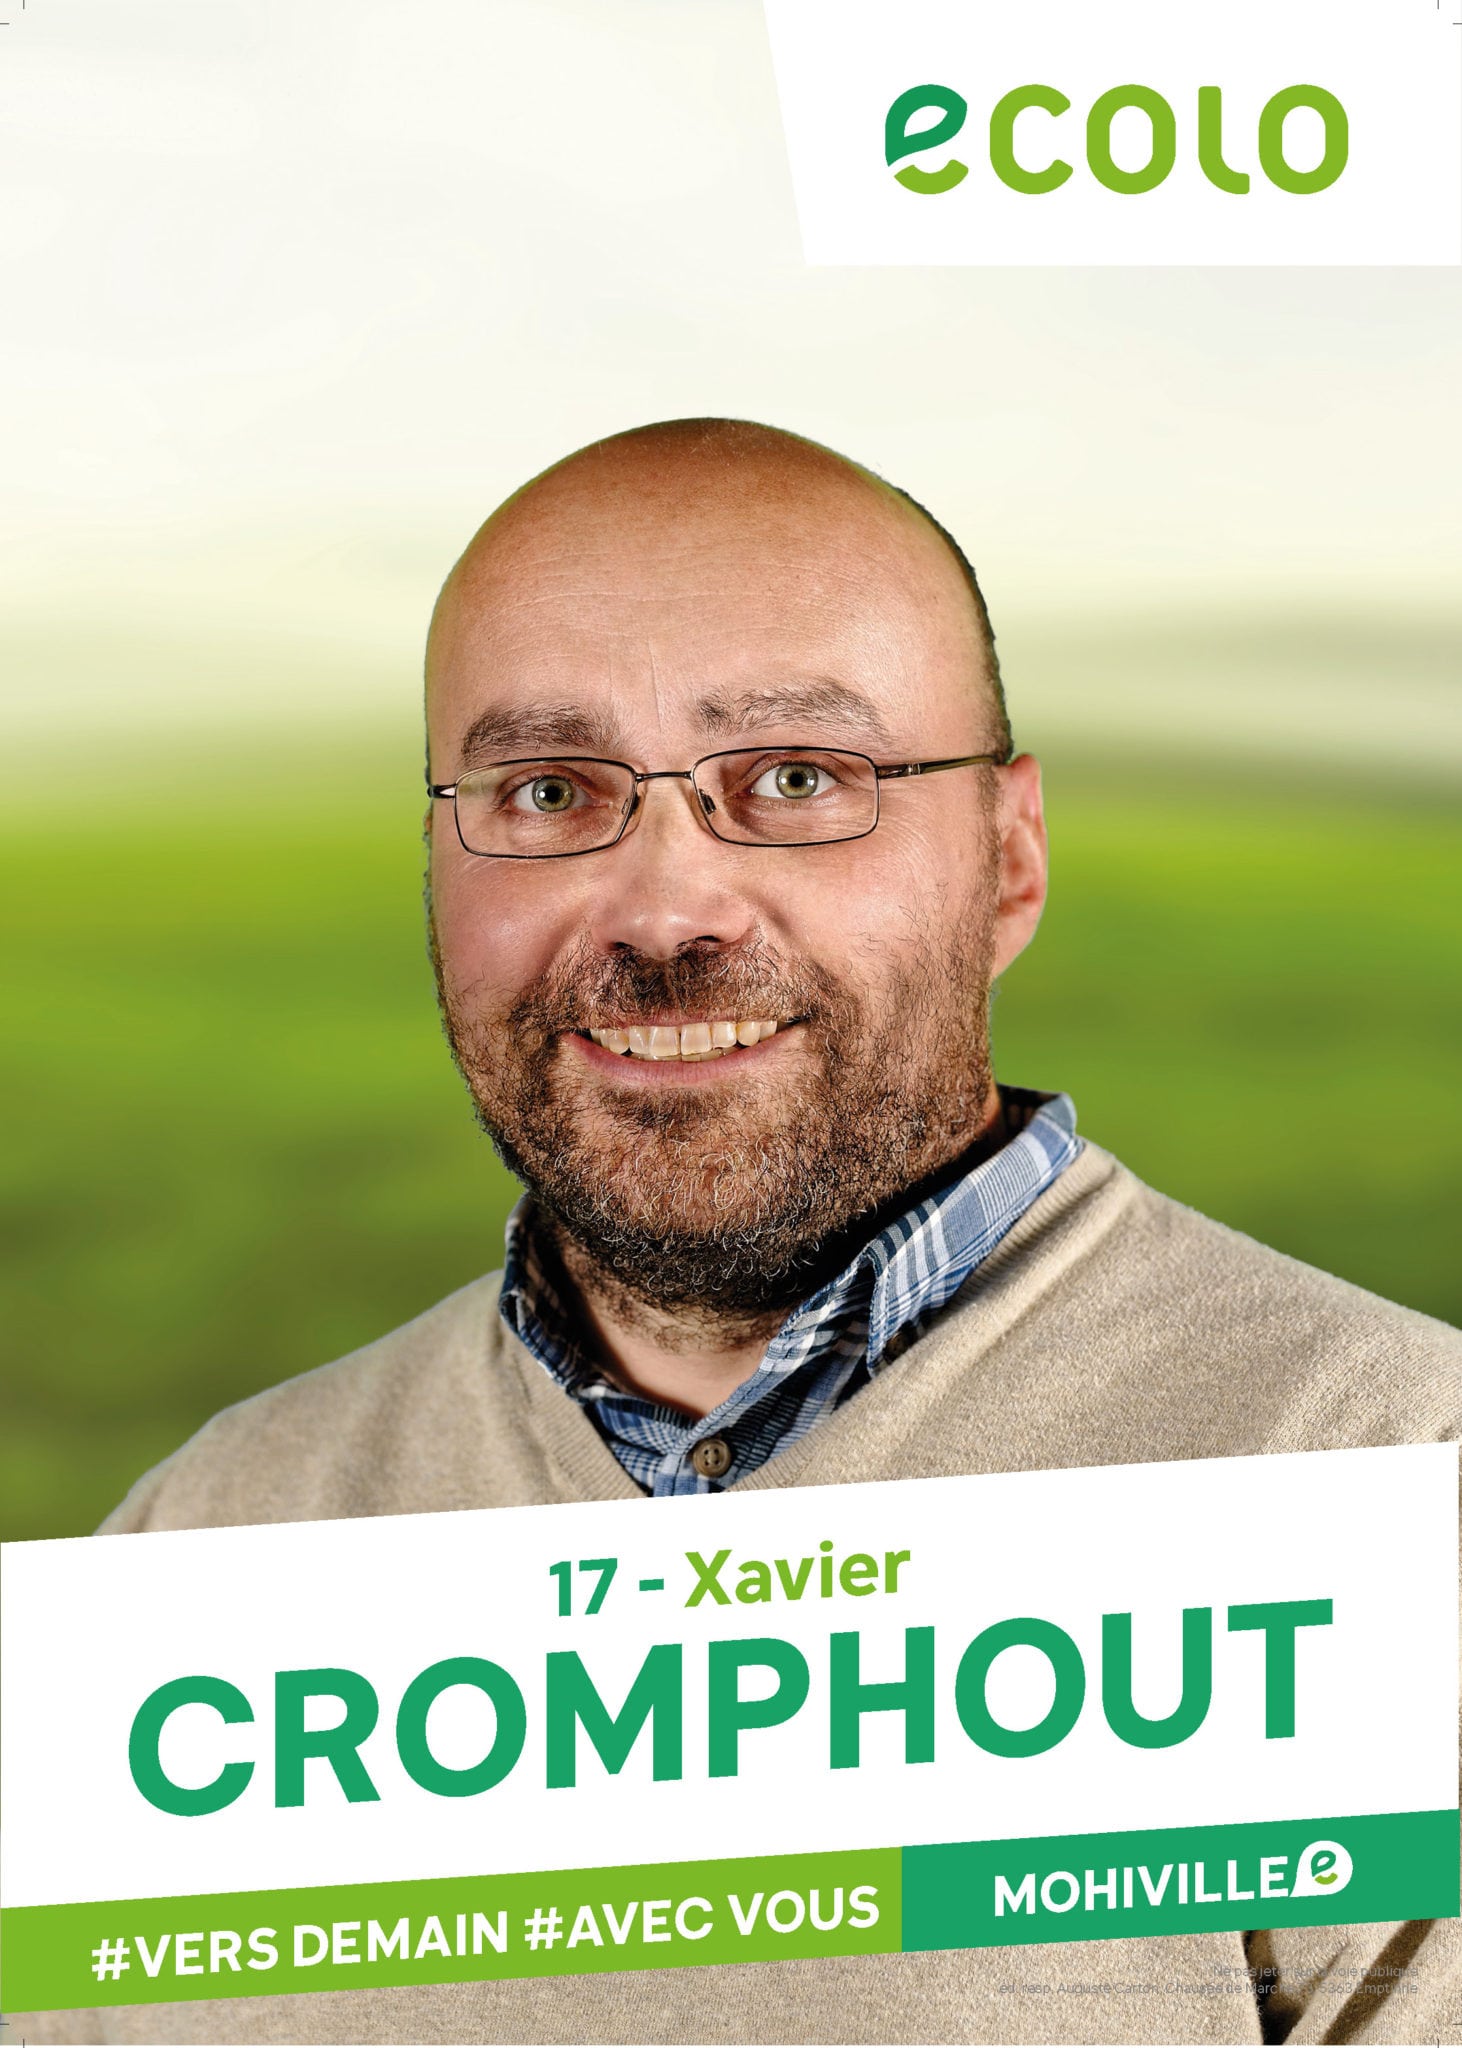 17 - Xavier CROMPHOUT